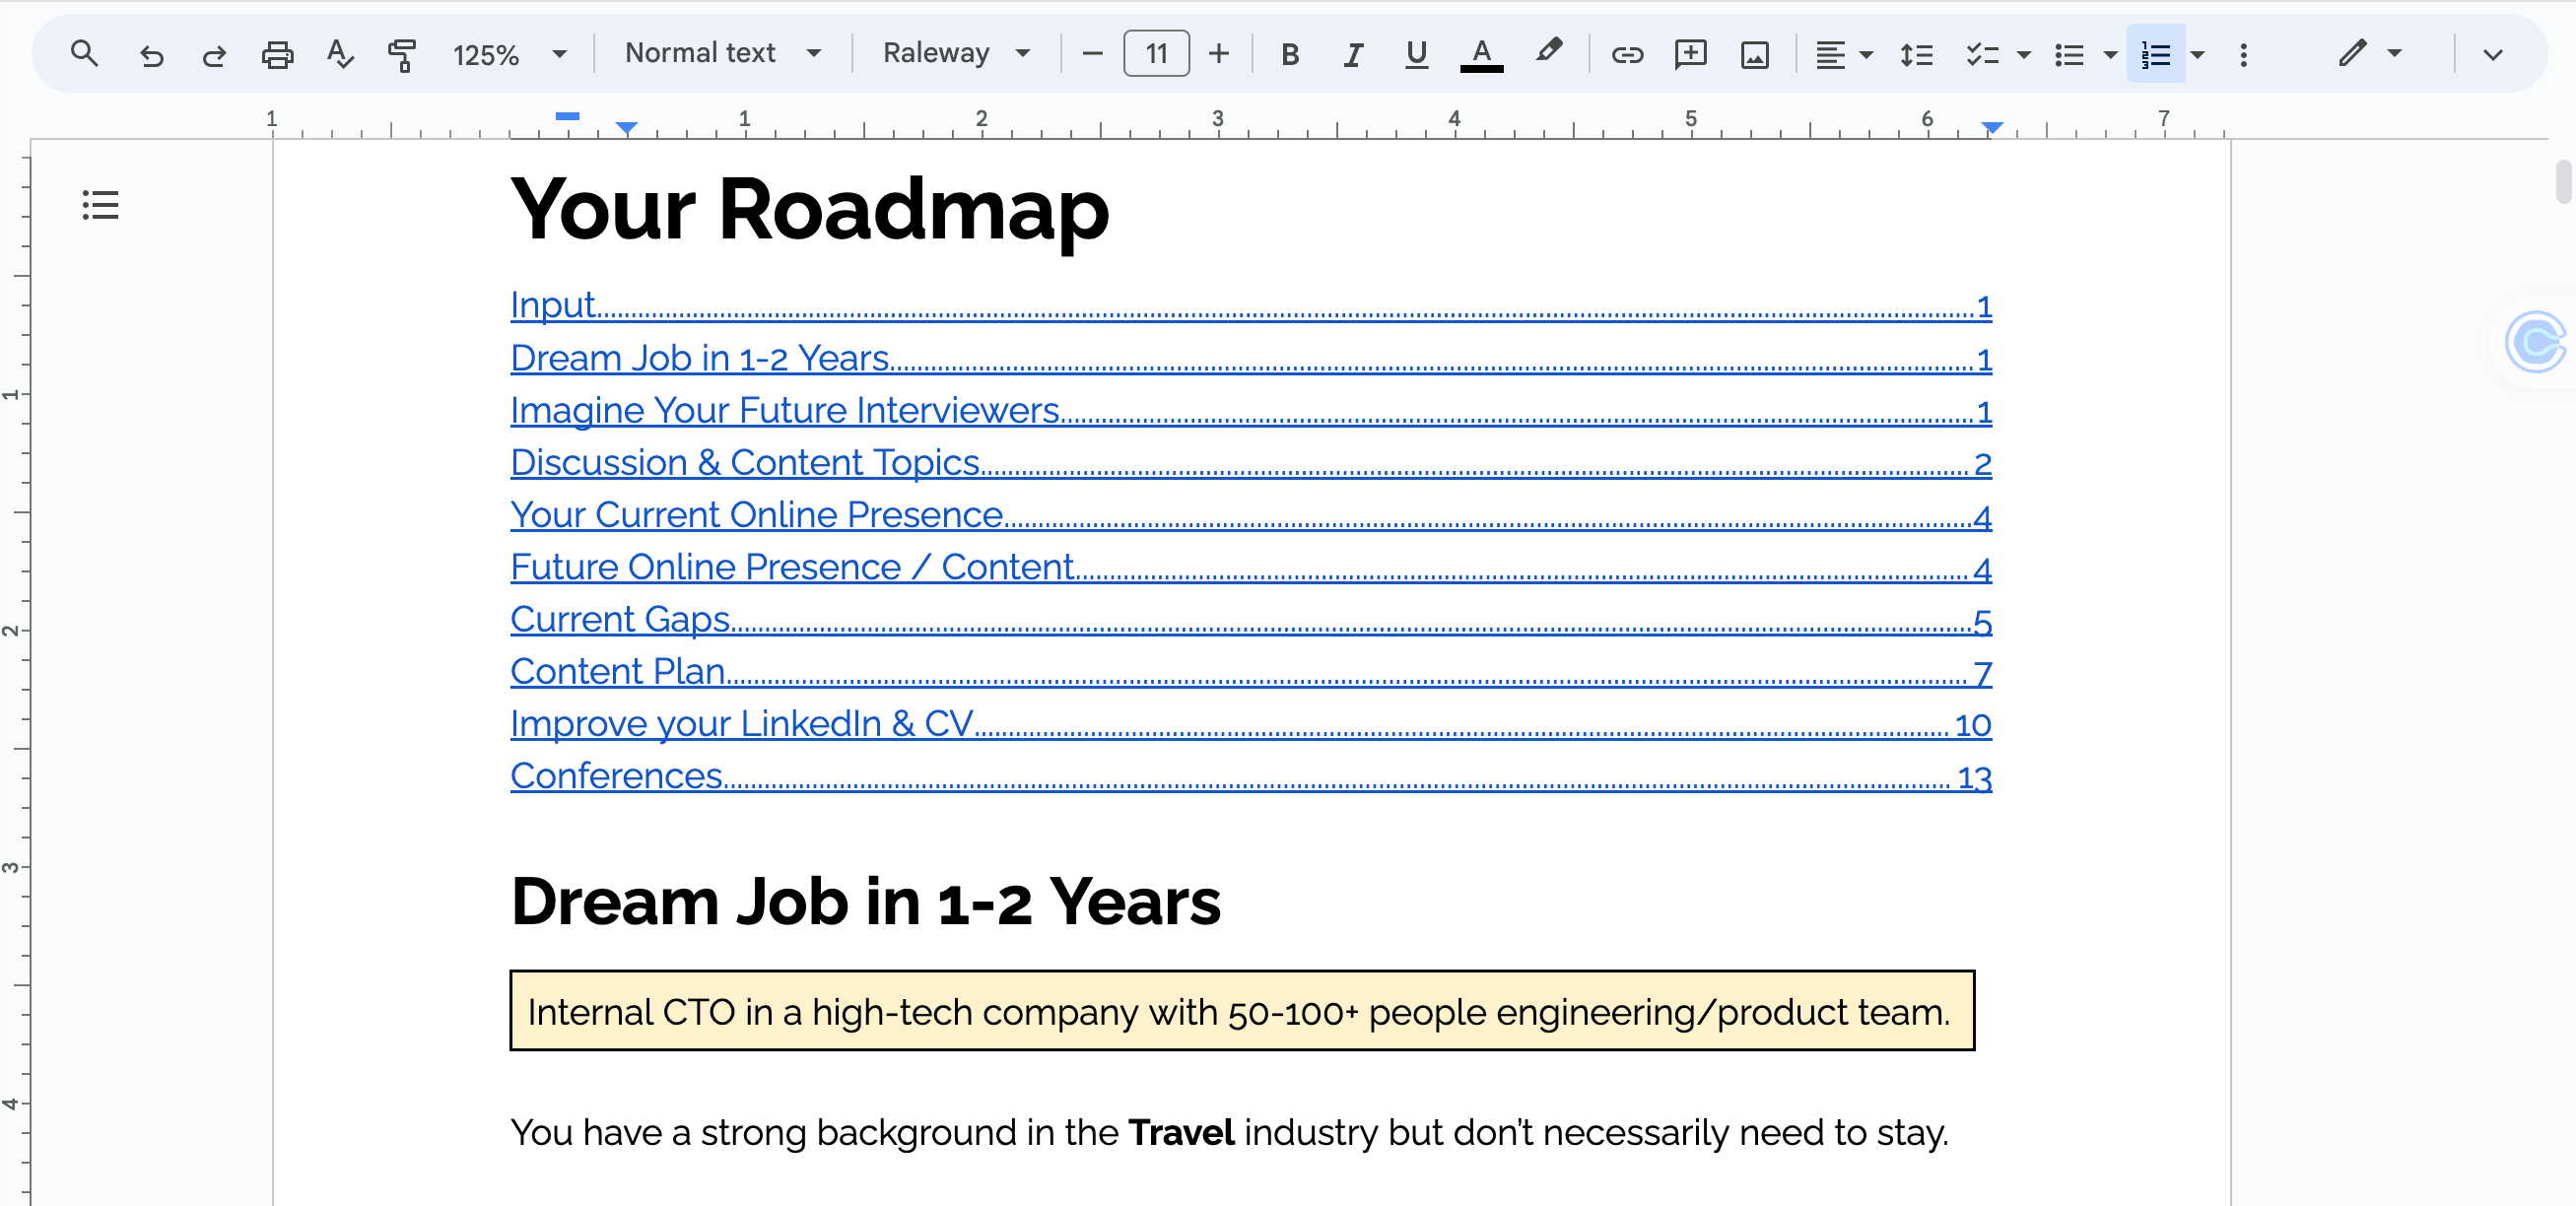 roadmap-screenshot-1-1